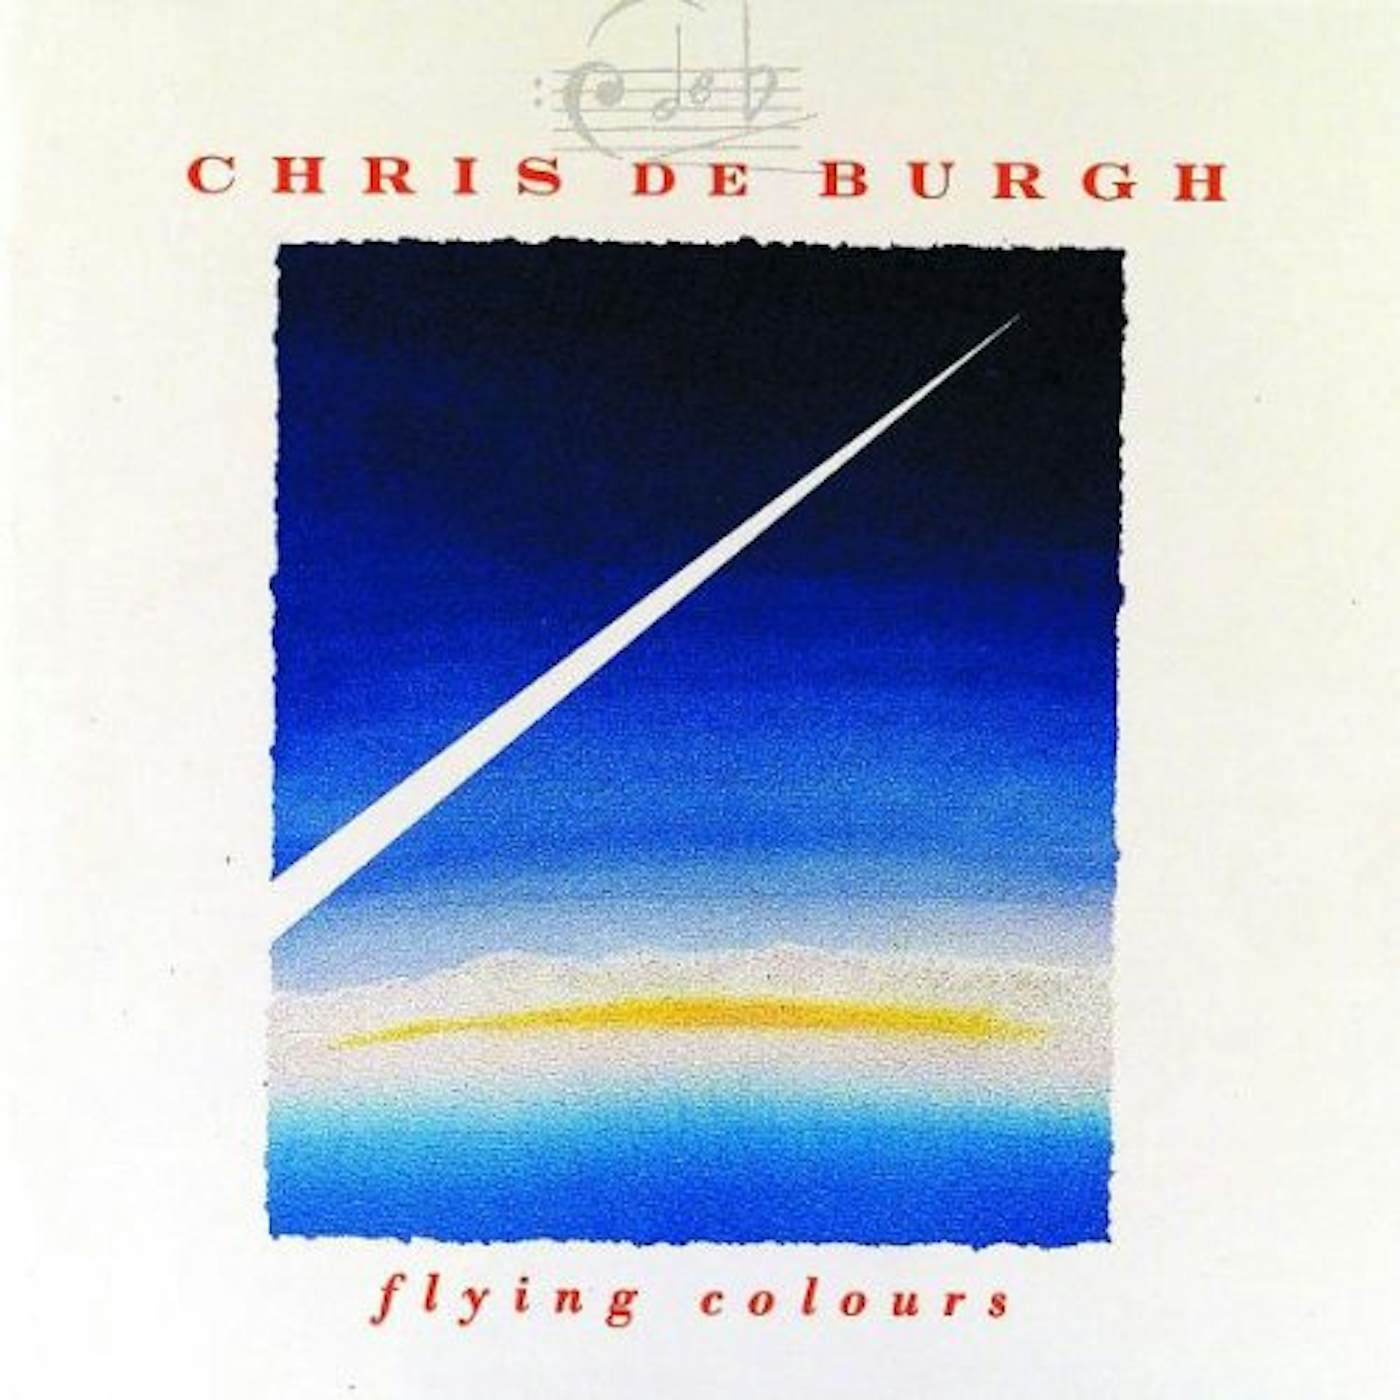 Chris de Burgh FLYING COLOURS CD